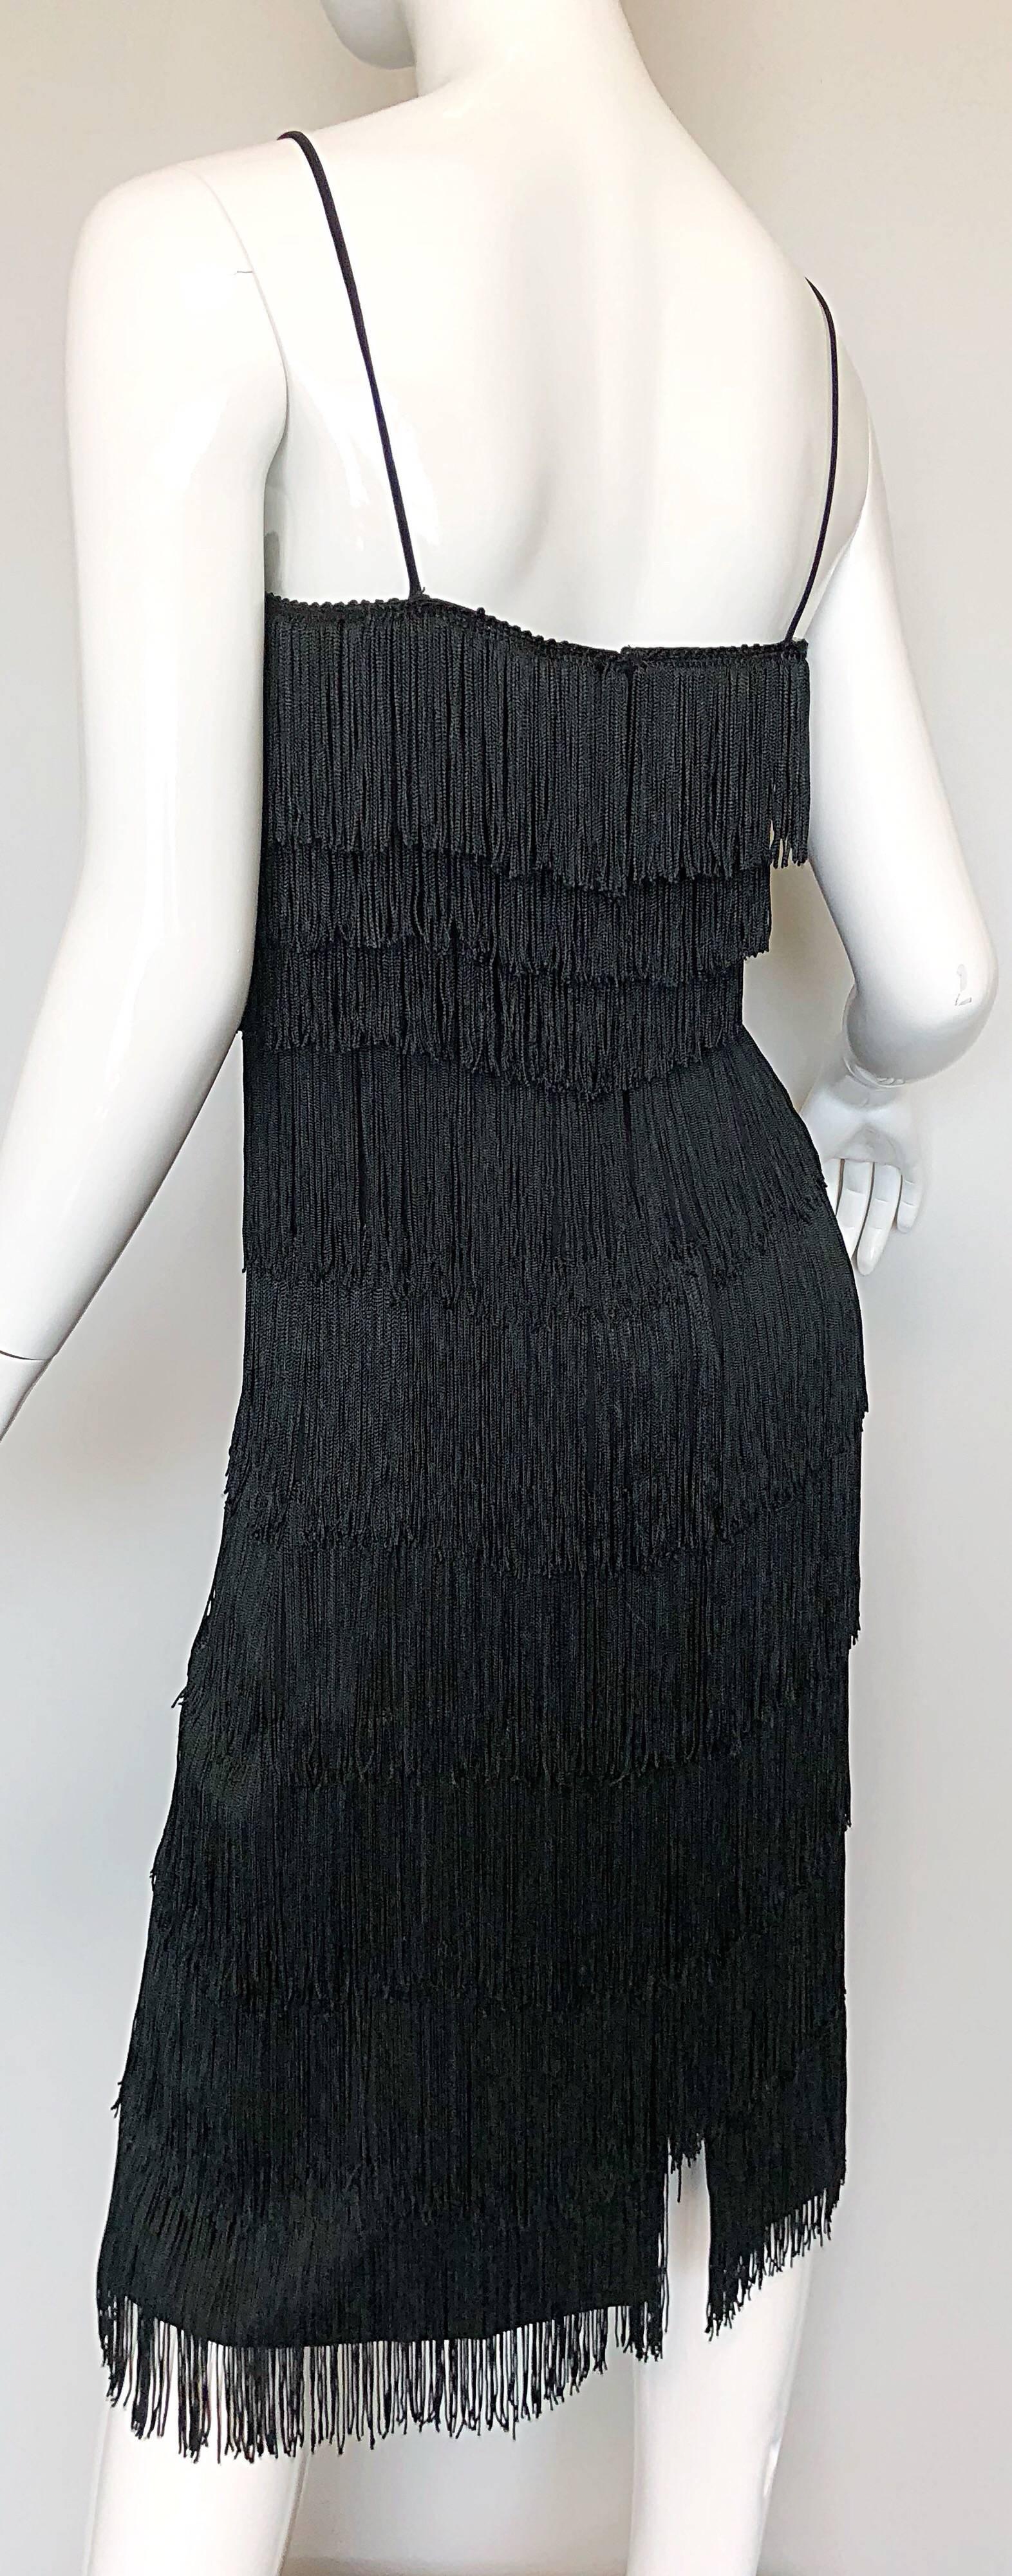 1970s Lilli Diamond Black Fully Fringed Vintage Flapper Style 70s Cocktail Dress For Sale 1